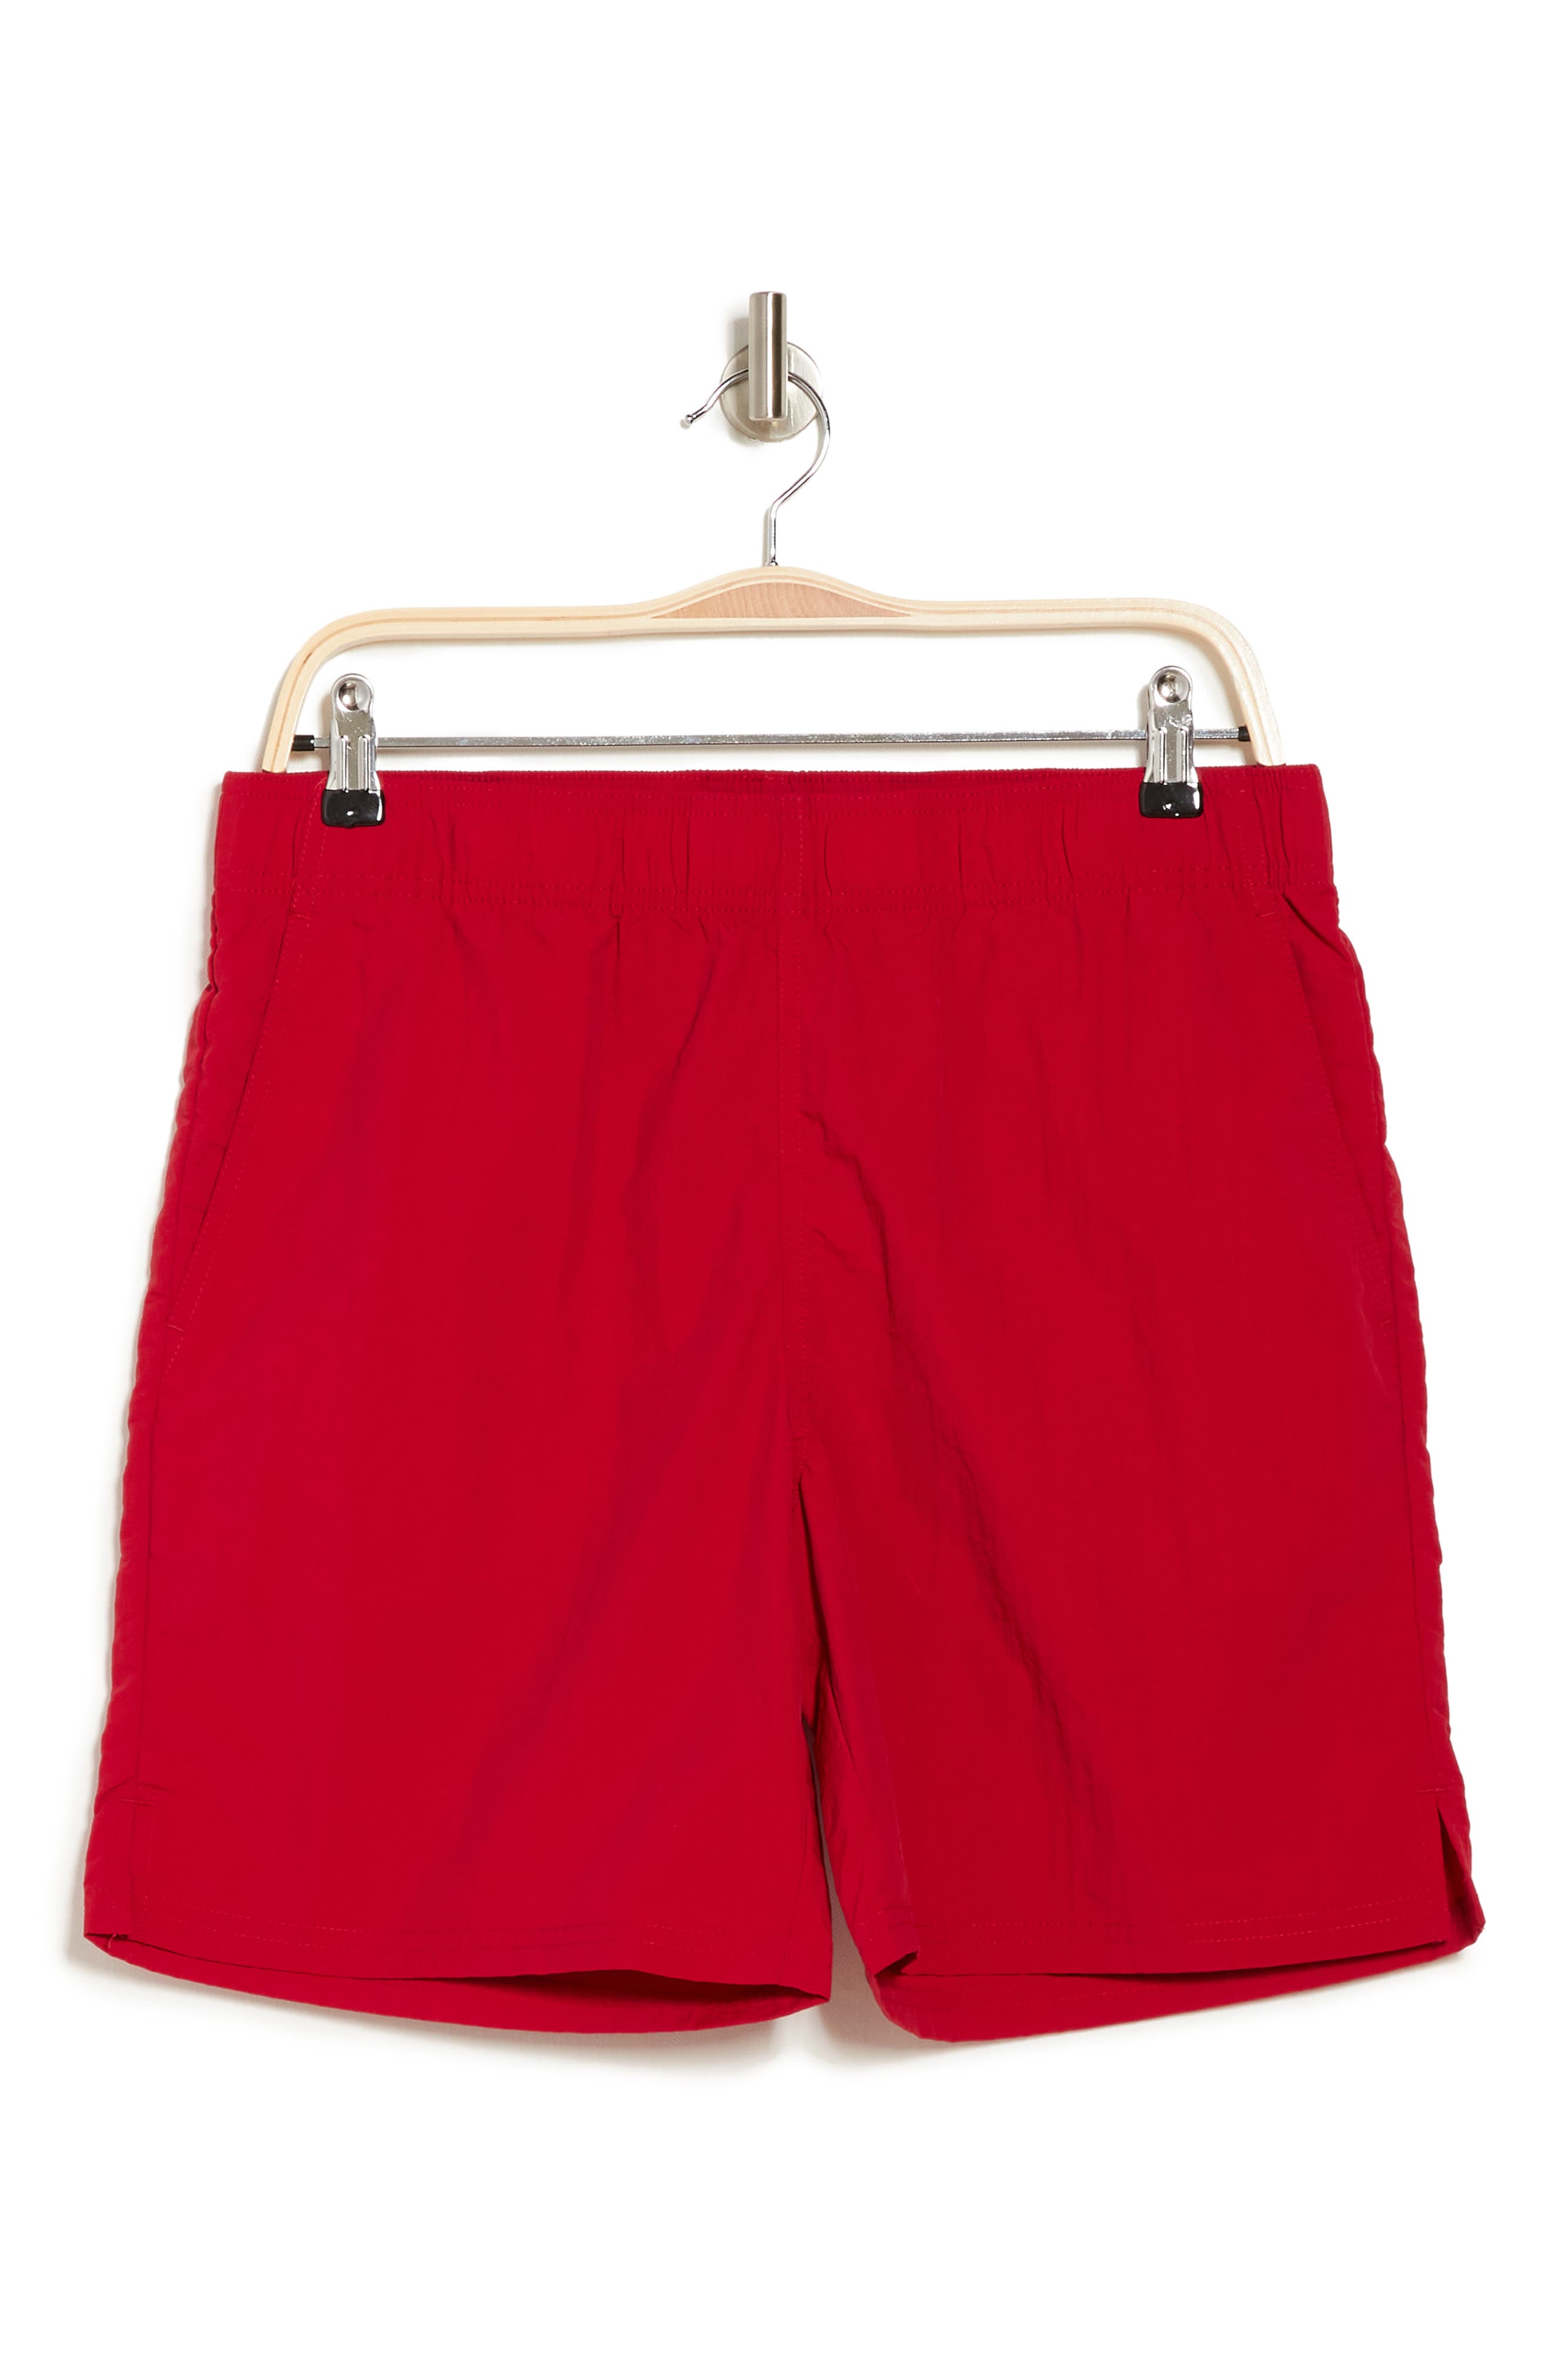 Abound Nylon Shorts In Red Chili